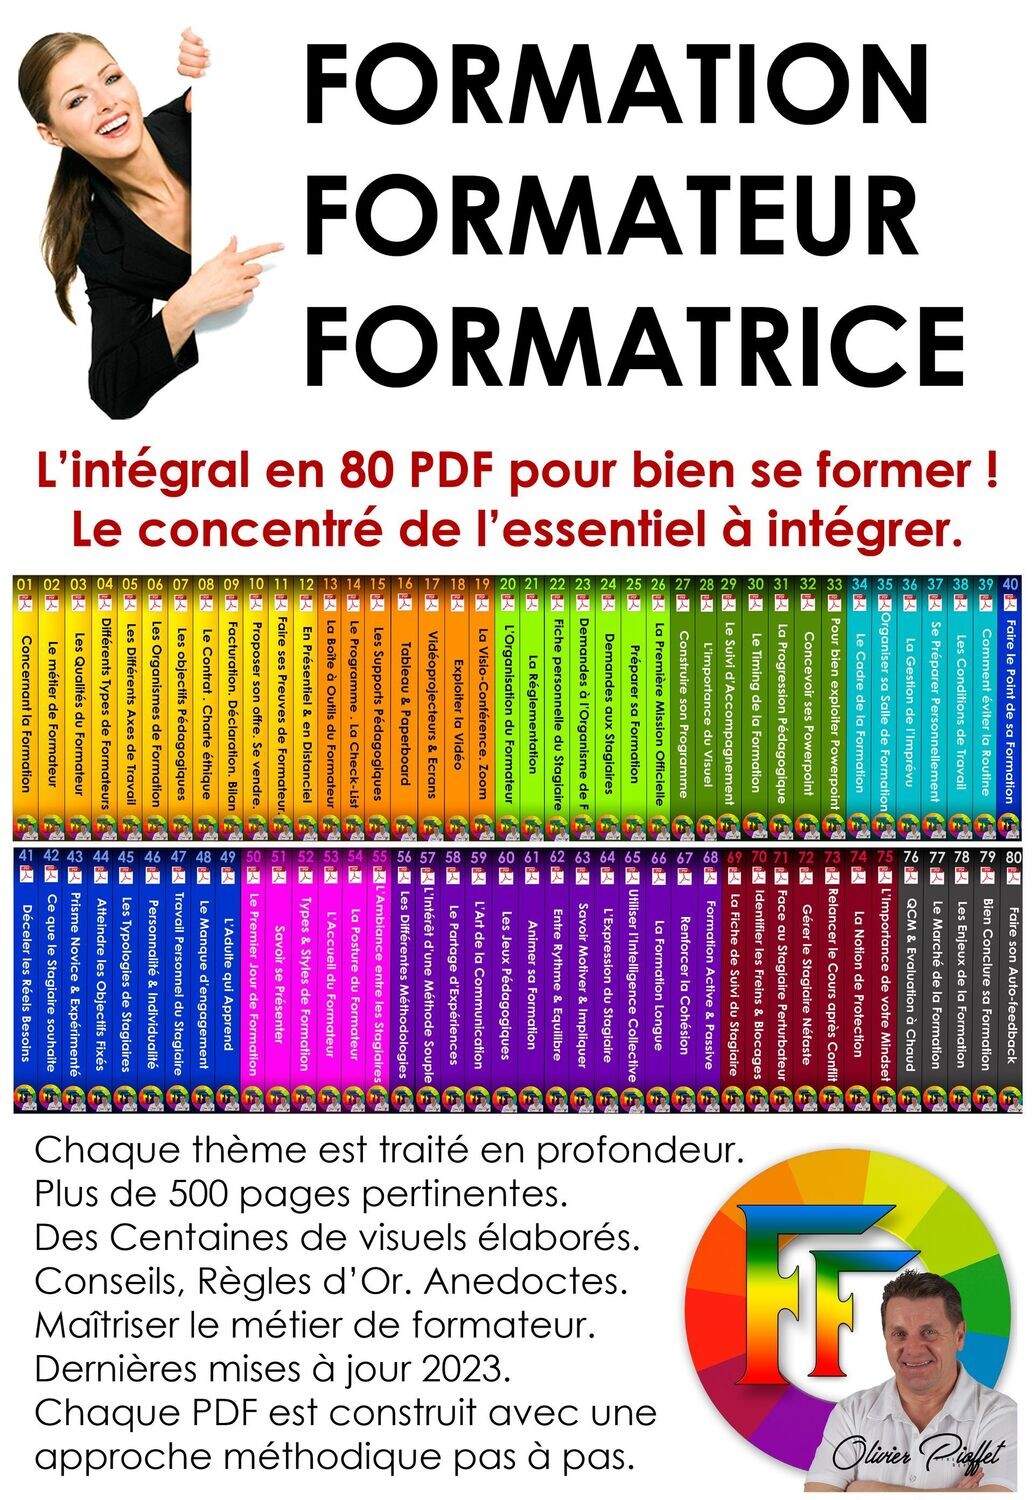 PACK COLLECTION 80 PDF FORMATION DE FORMATEUR, FORMATRICE